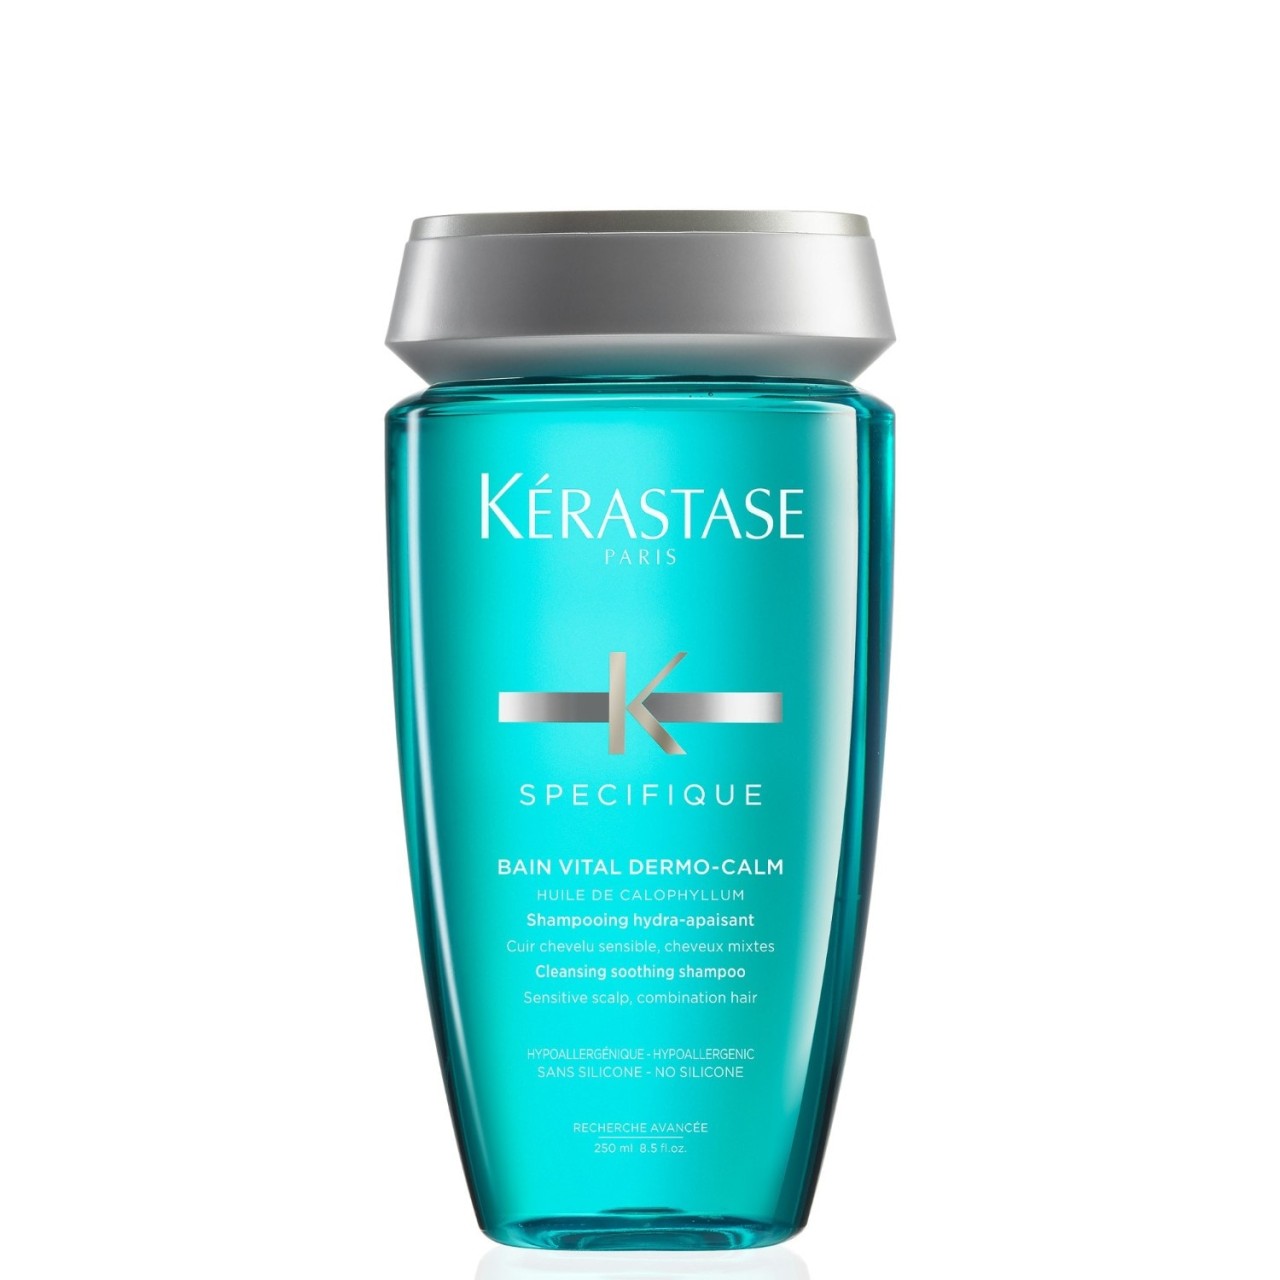 Kérastase - Specifique Bain Vital Dermo-Calm Shampoo -  250 ml